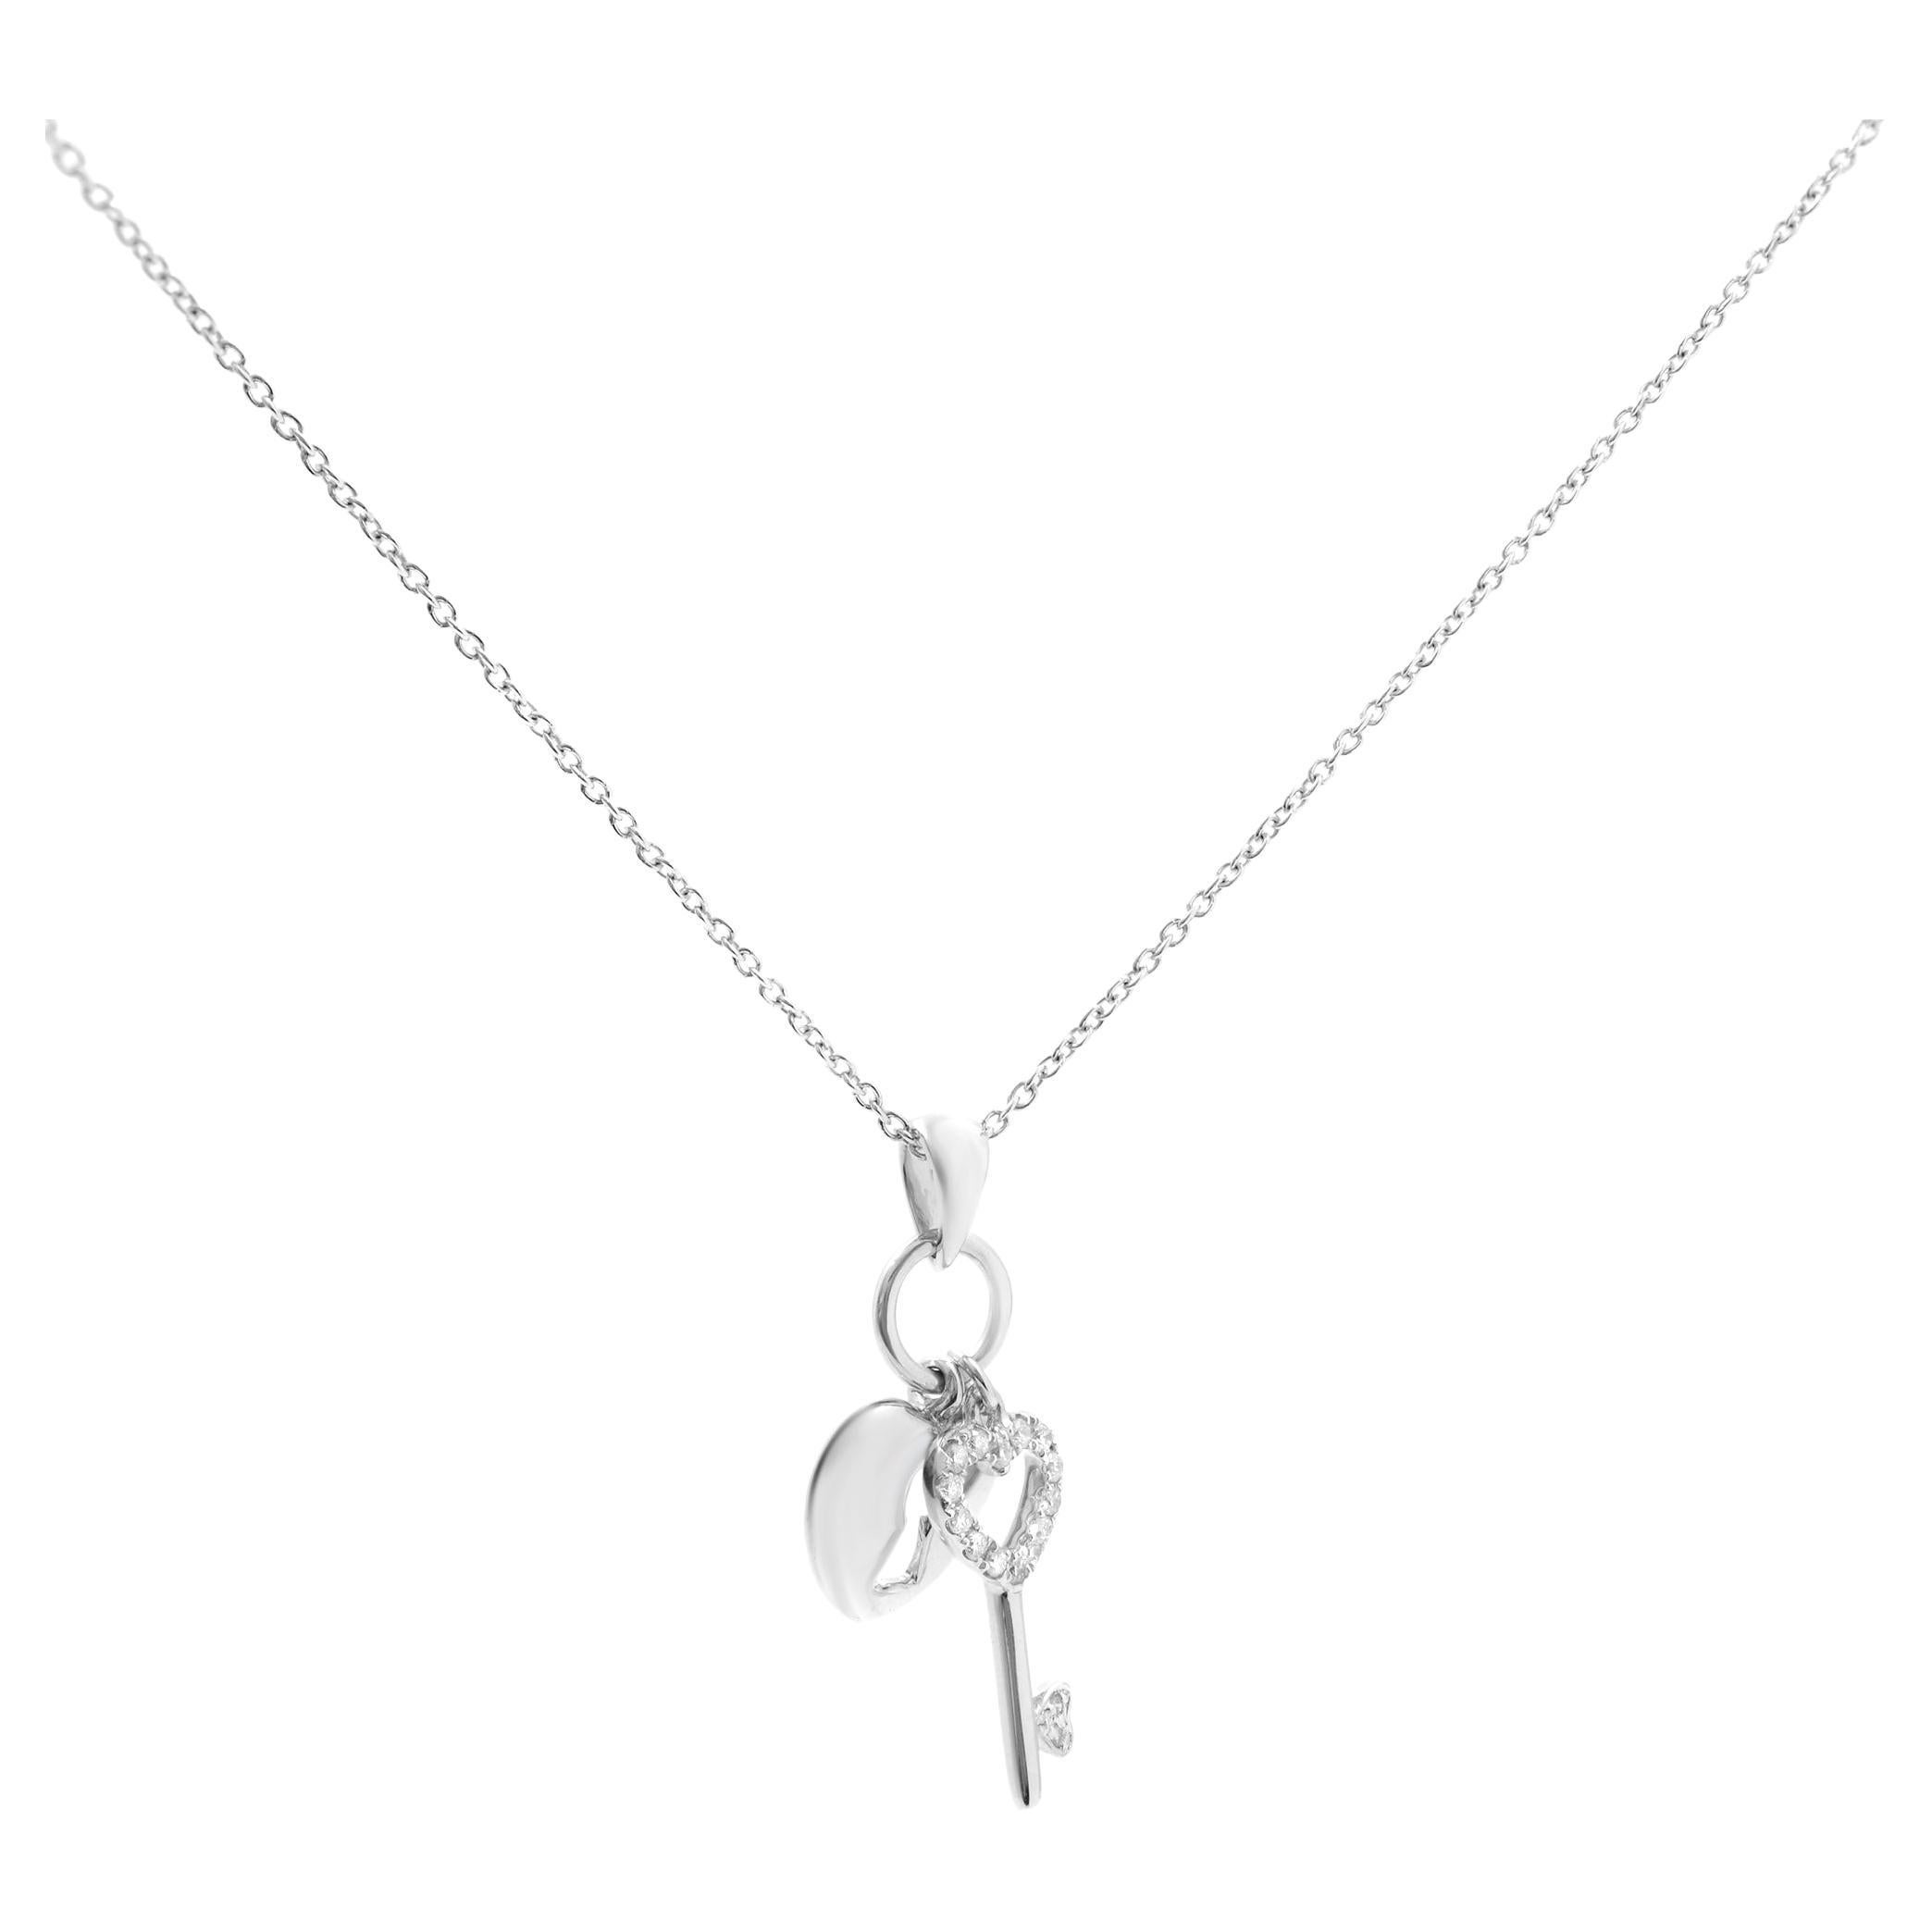 Black & White Diamond Heart Lock & Key Necklace in Sterling Silver